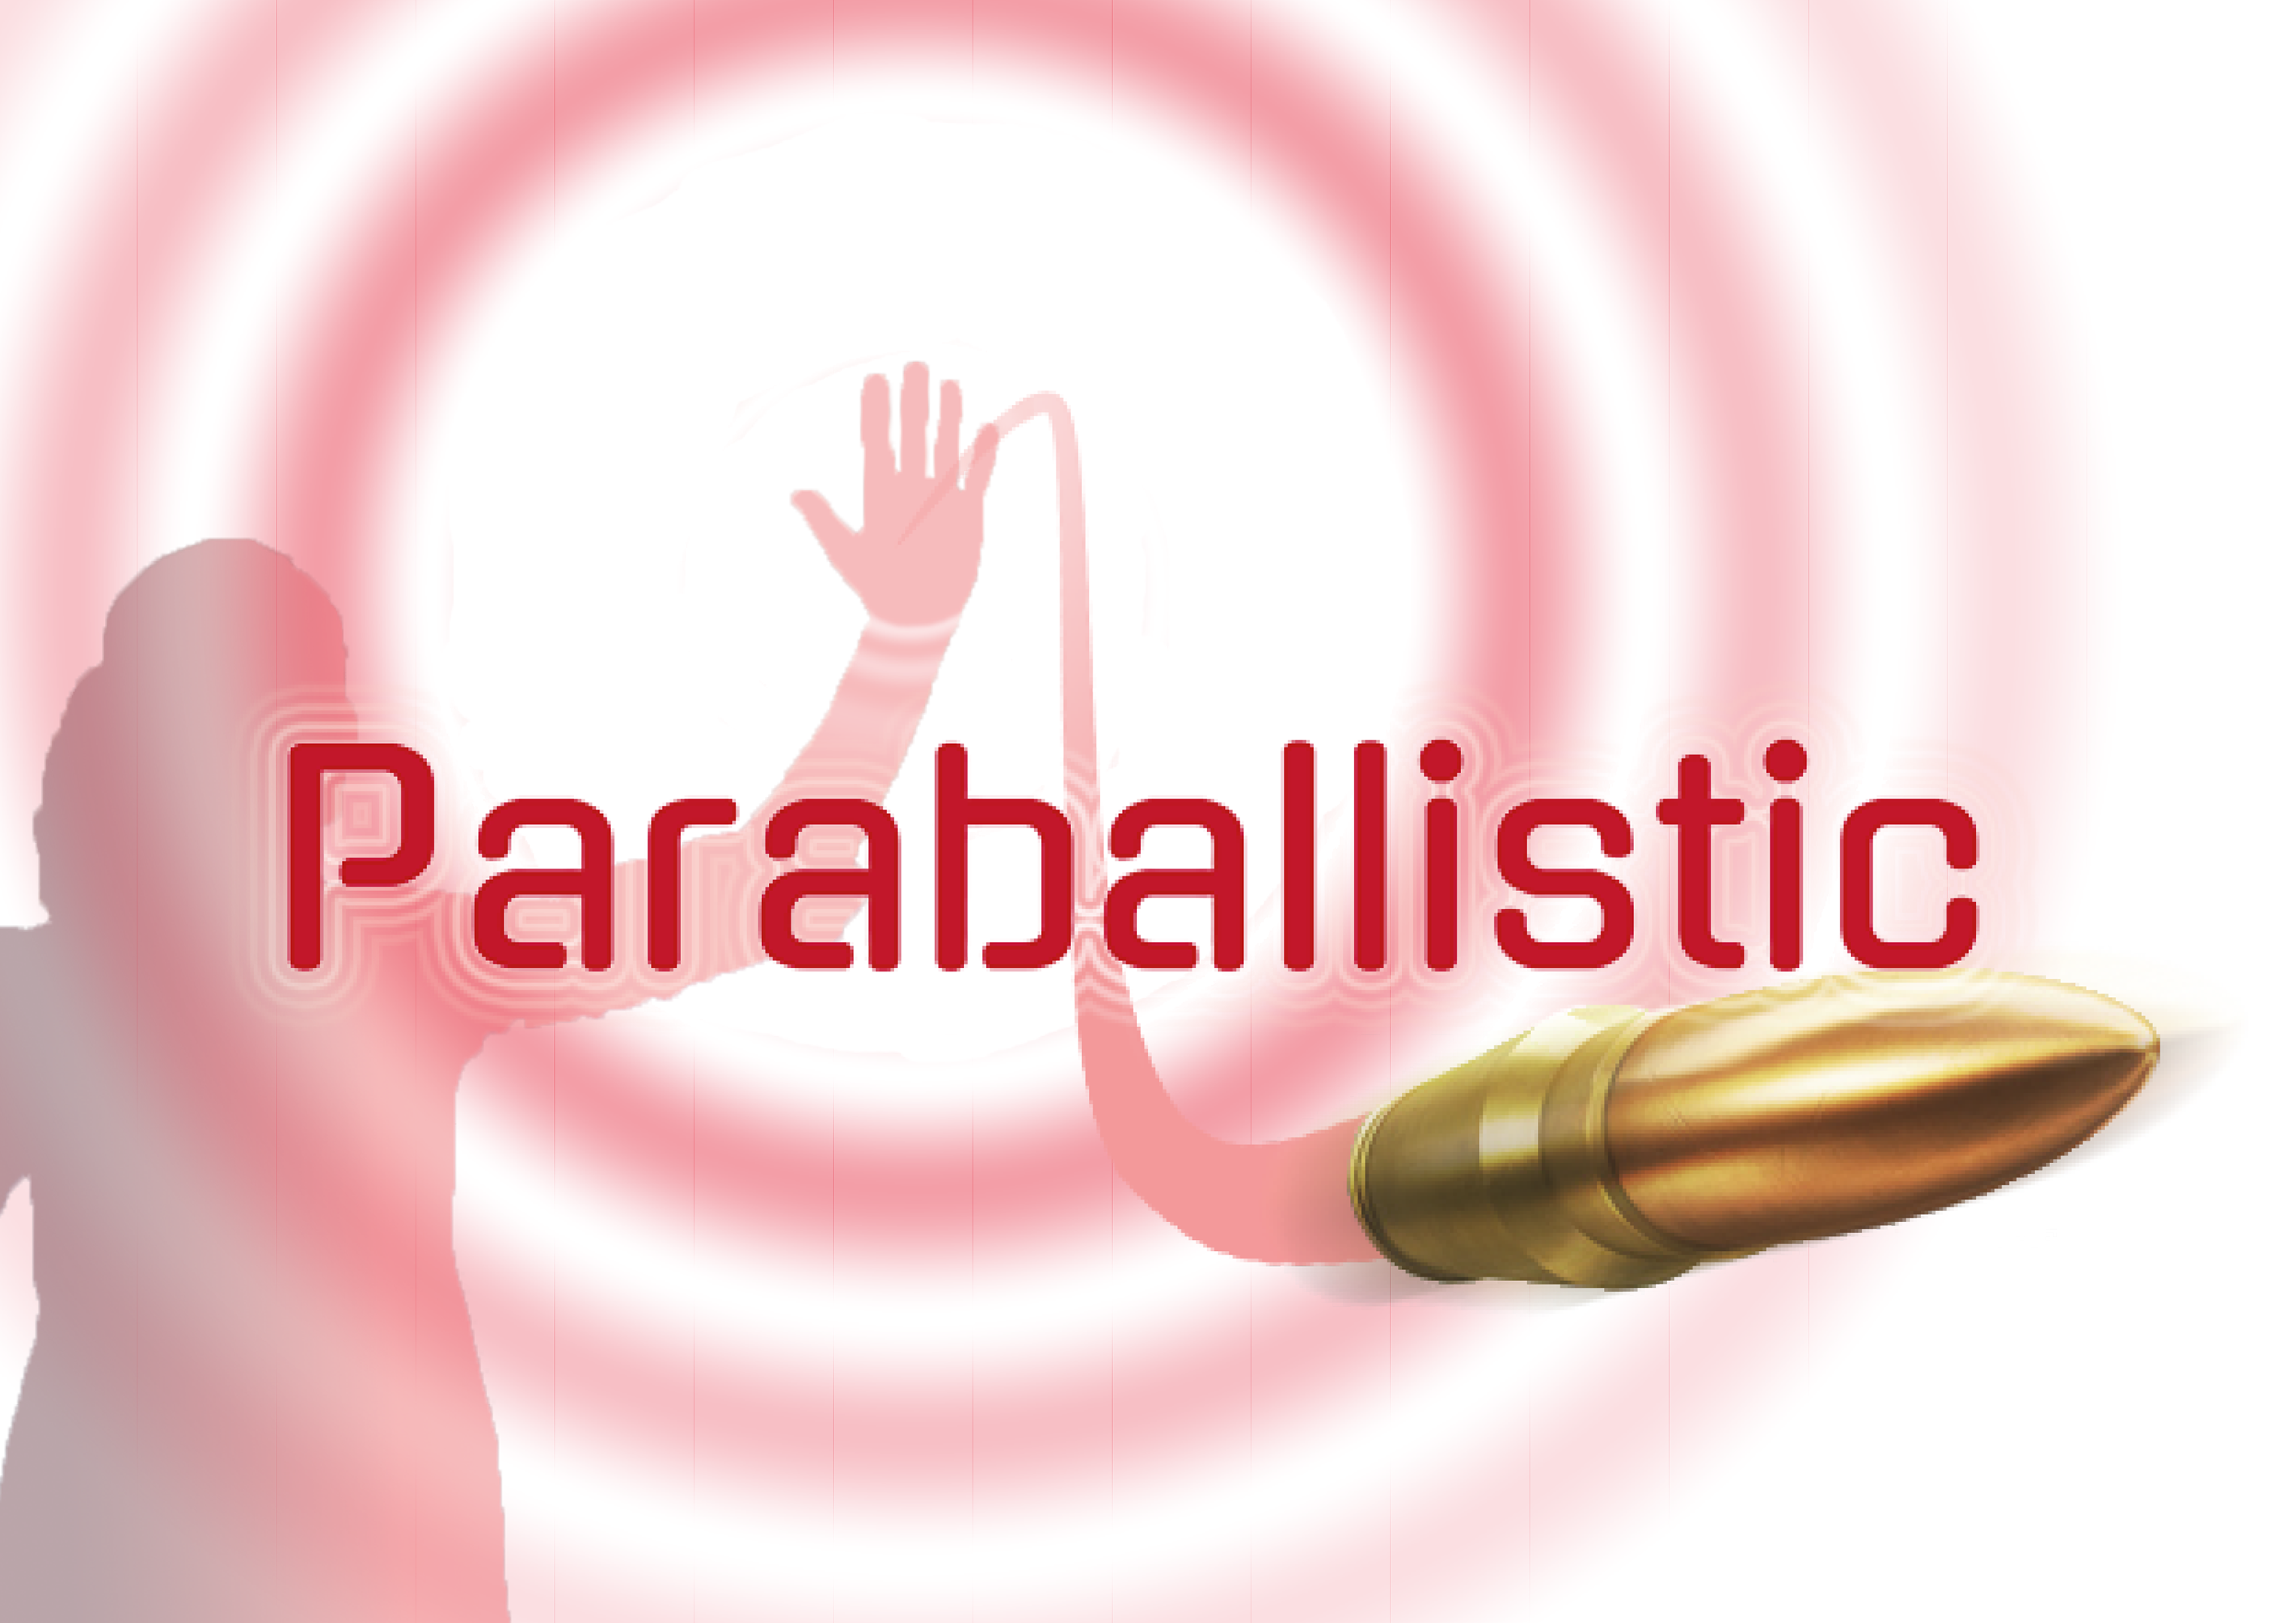 Paraballistic